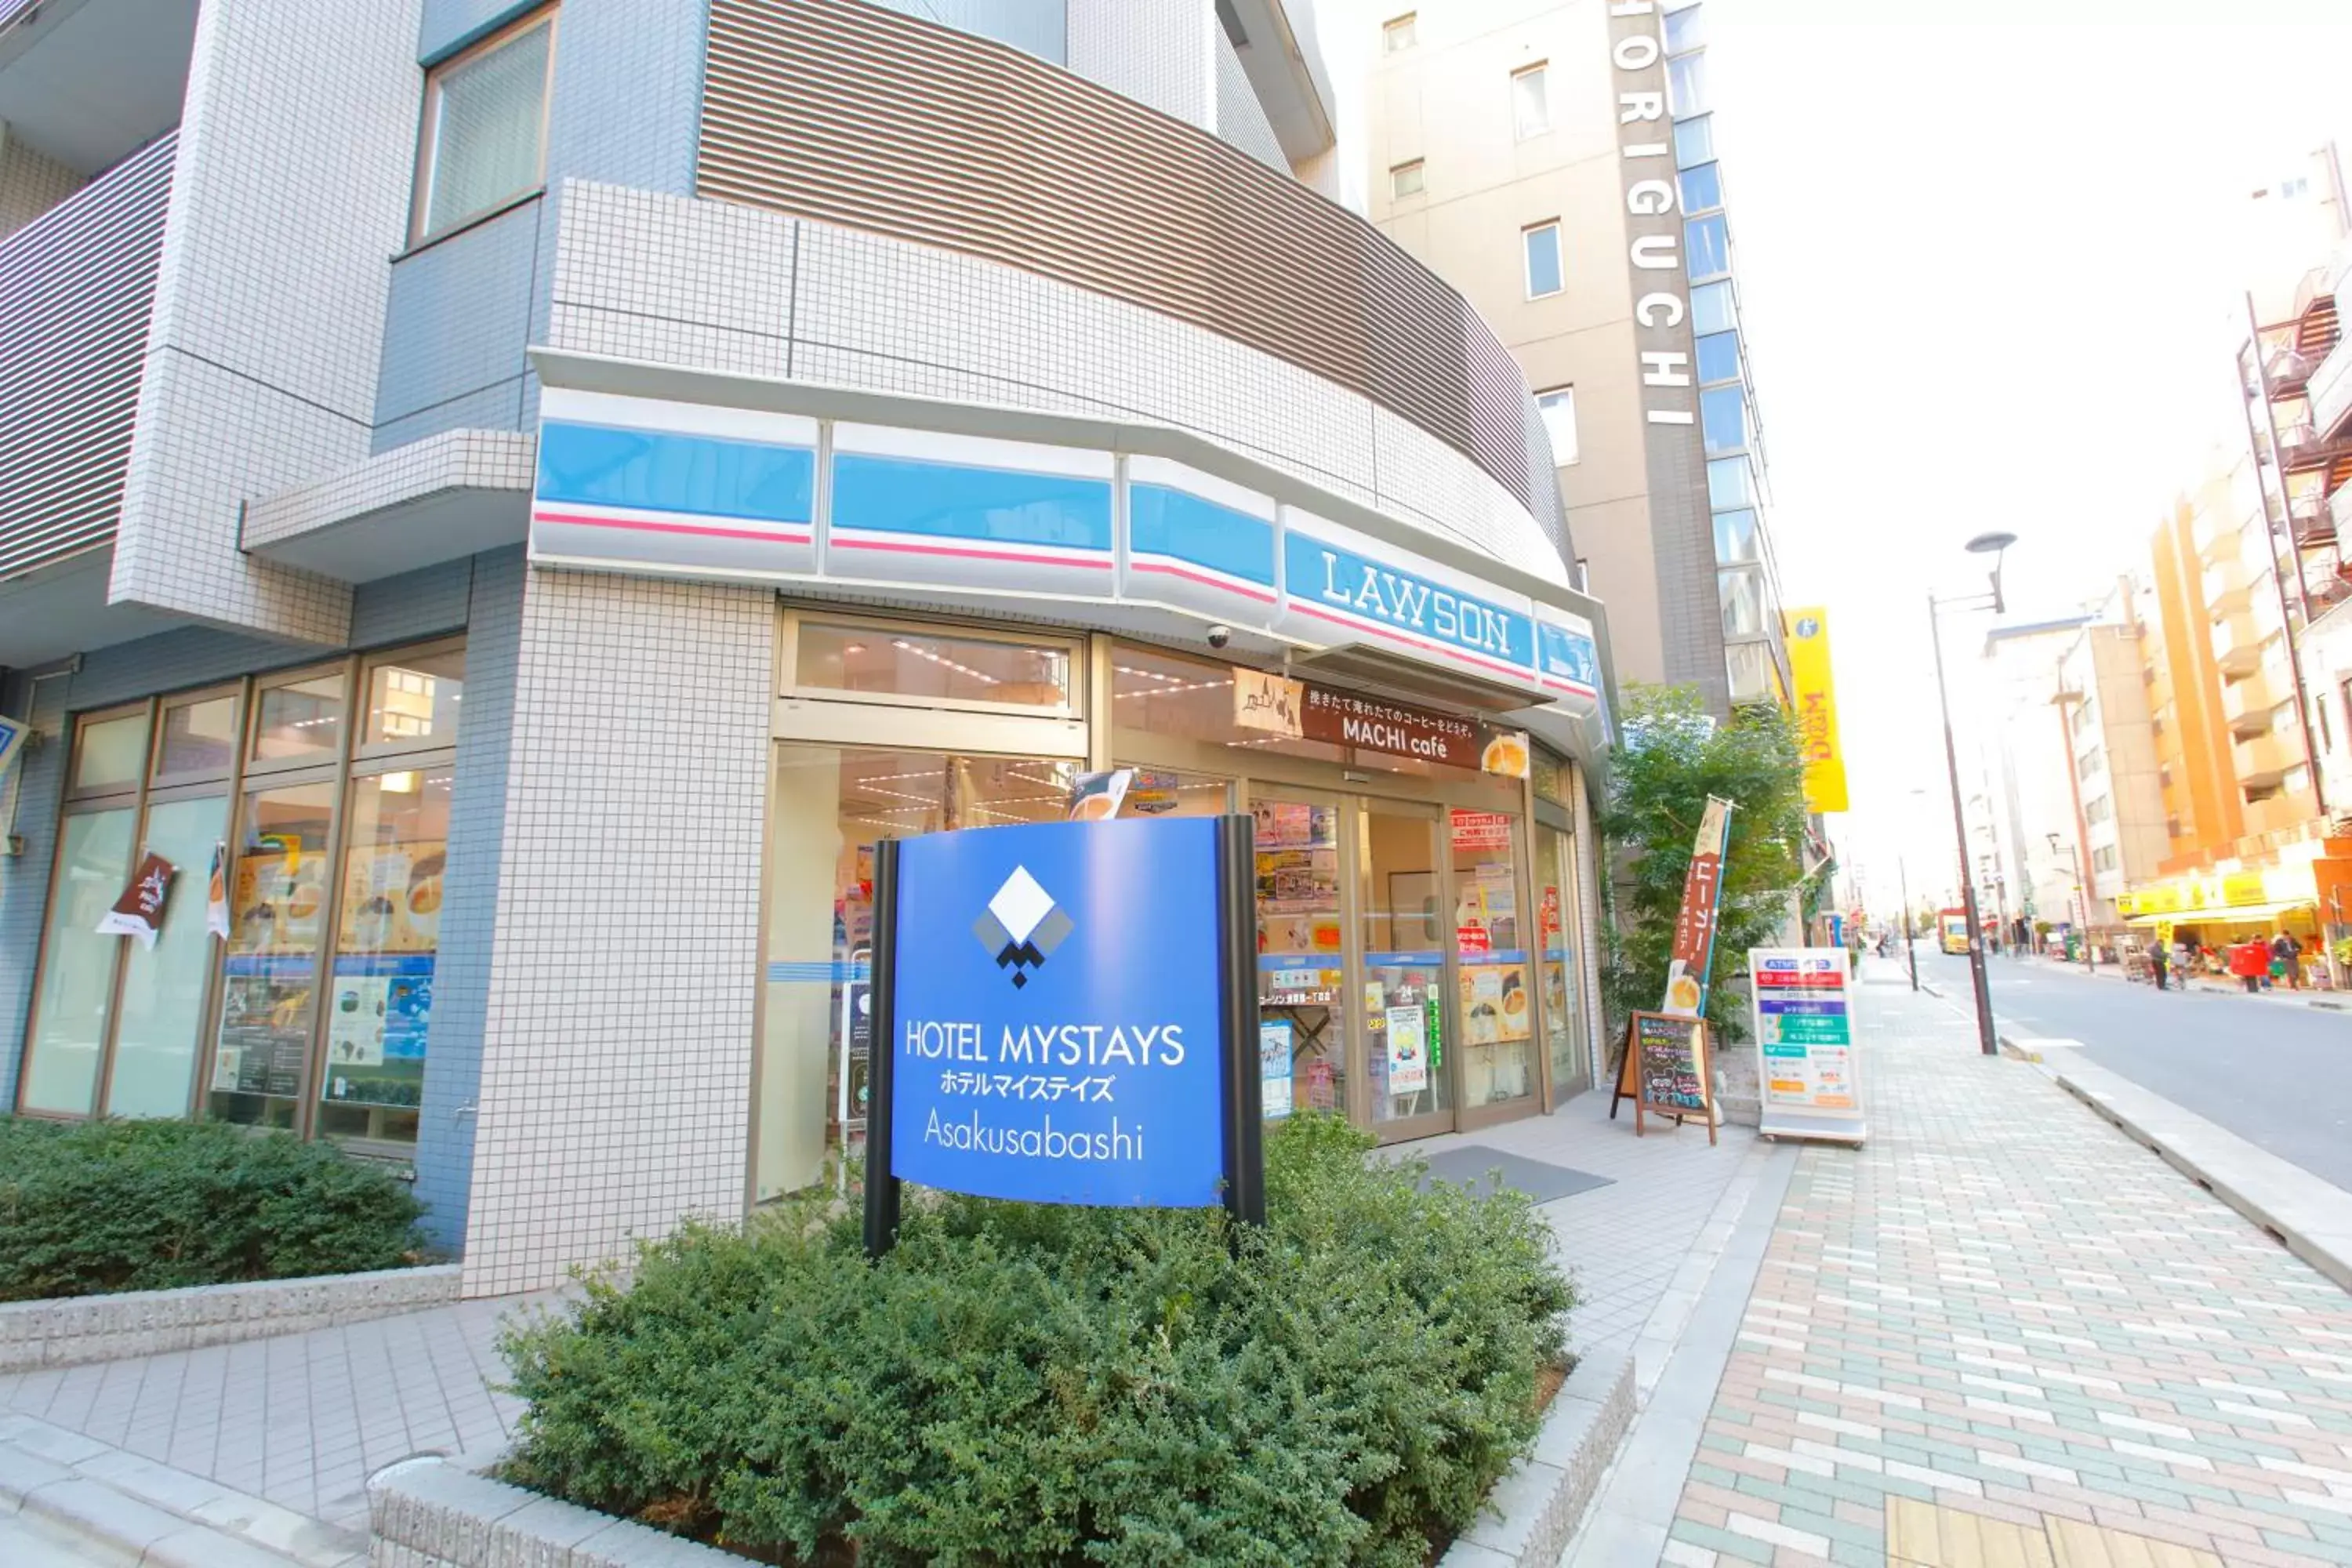 Facade/entrance in HOTEL MYSTAYS Asakusabashi